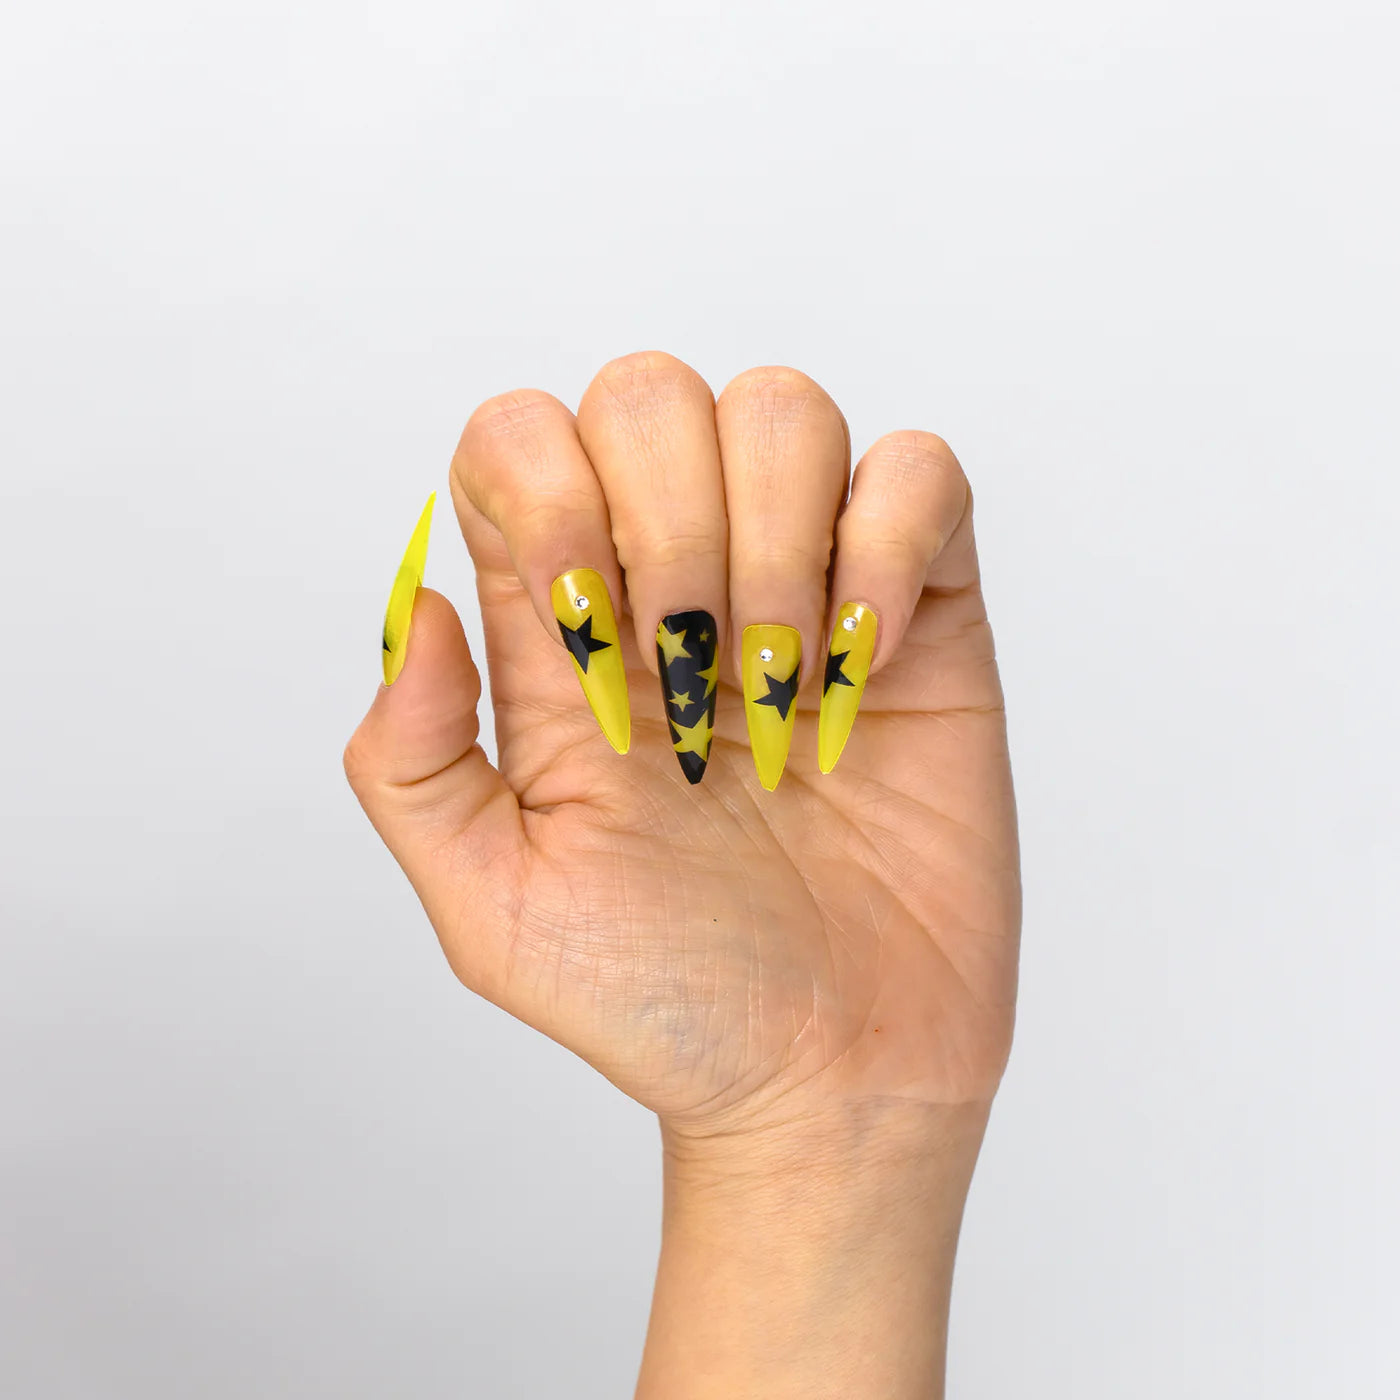 Kara Beauty - Buffi Press On Nails Lime Jello